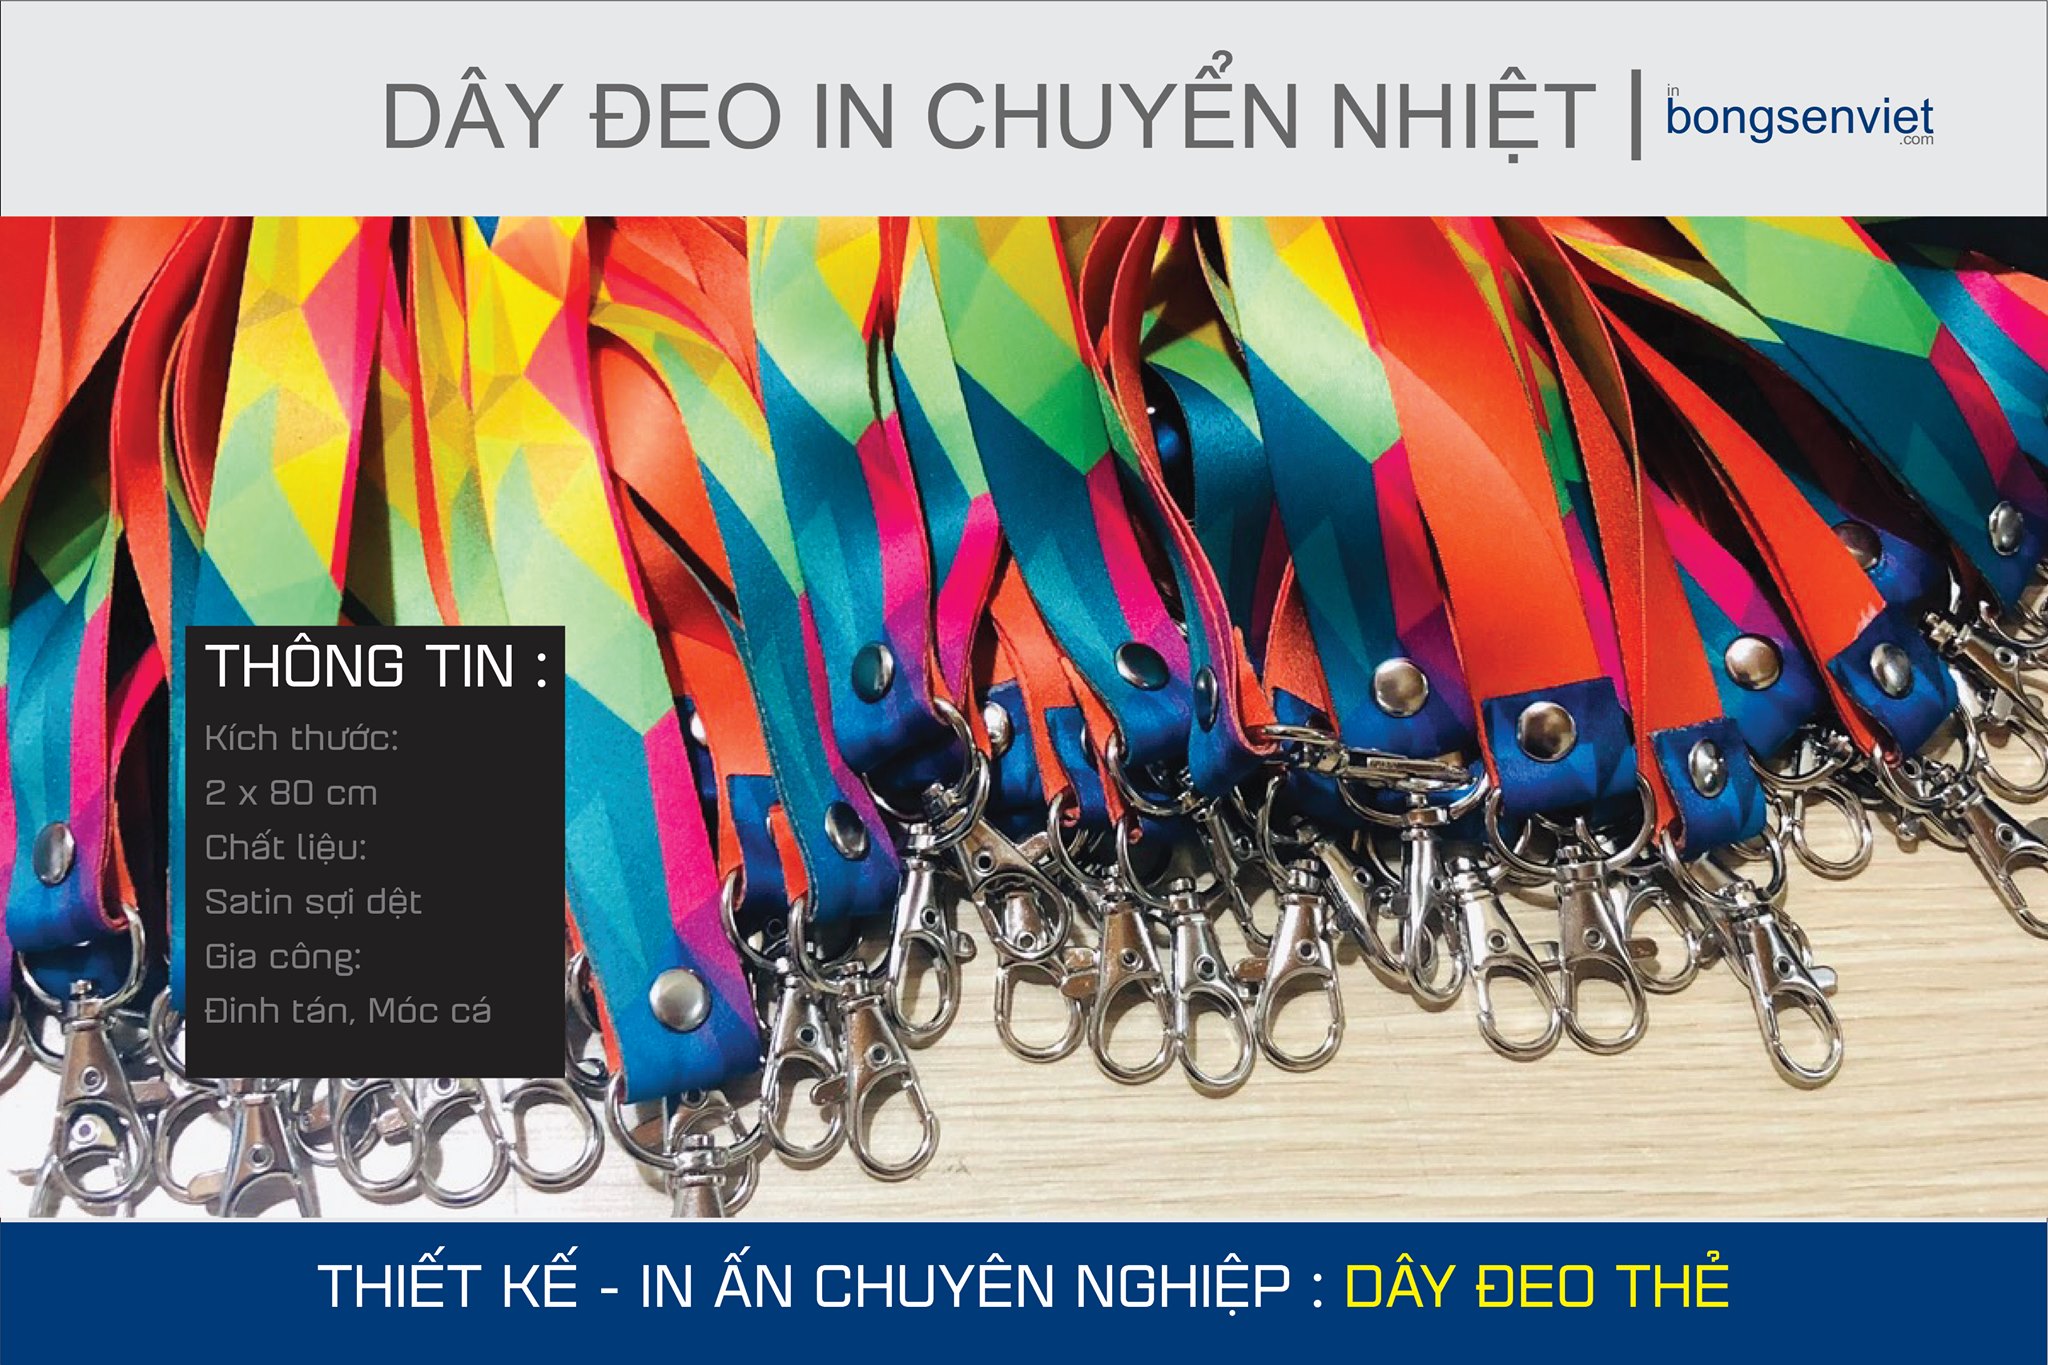 Day-deo-in-chuyen-nhiet